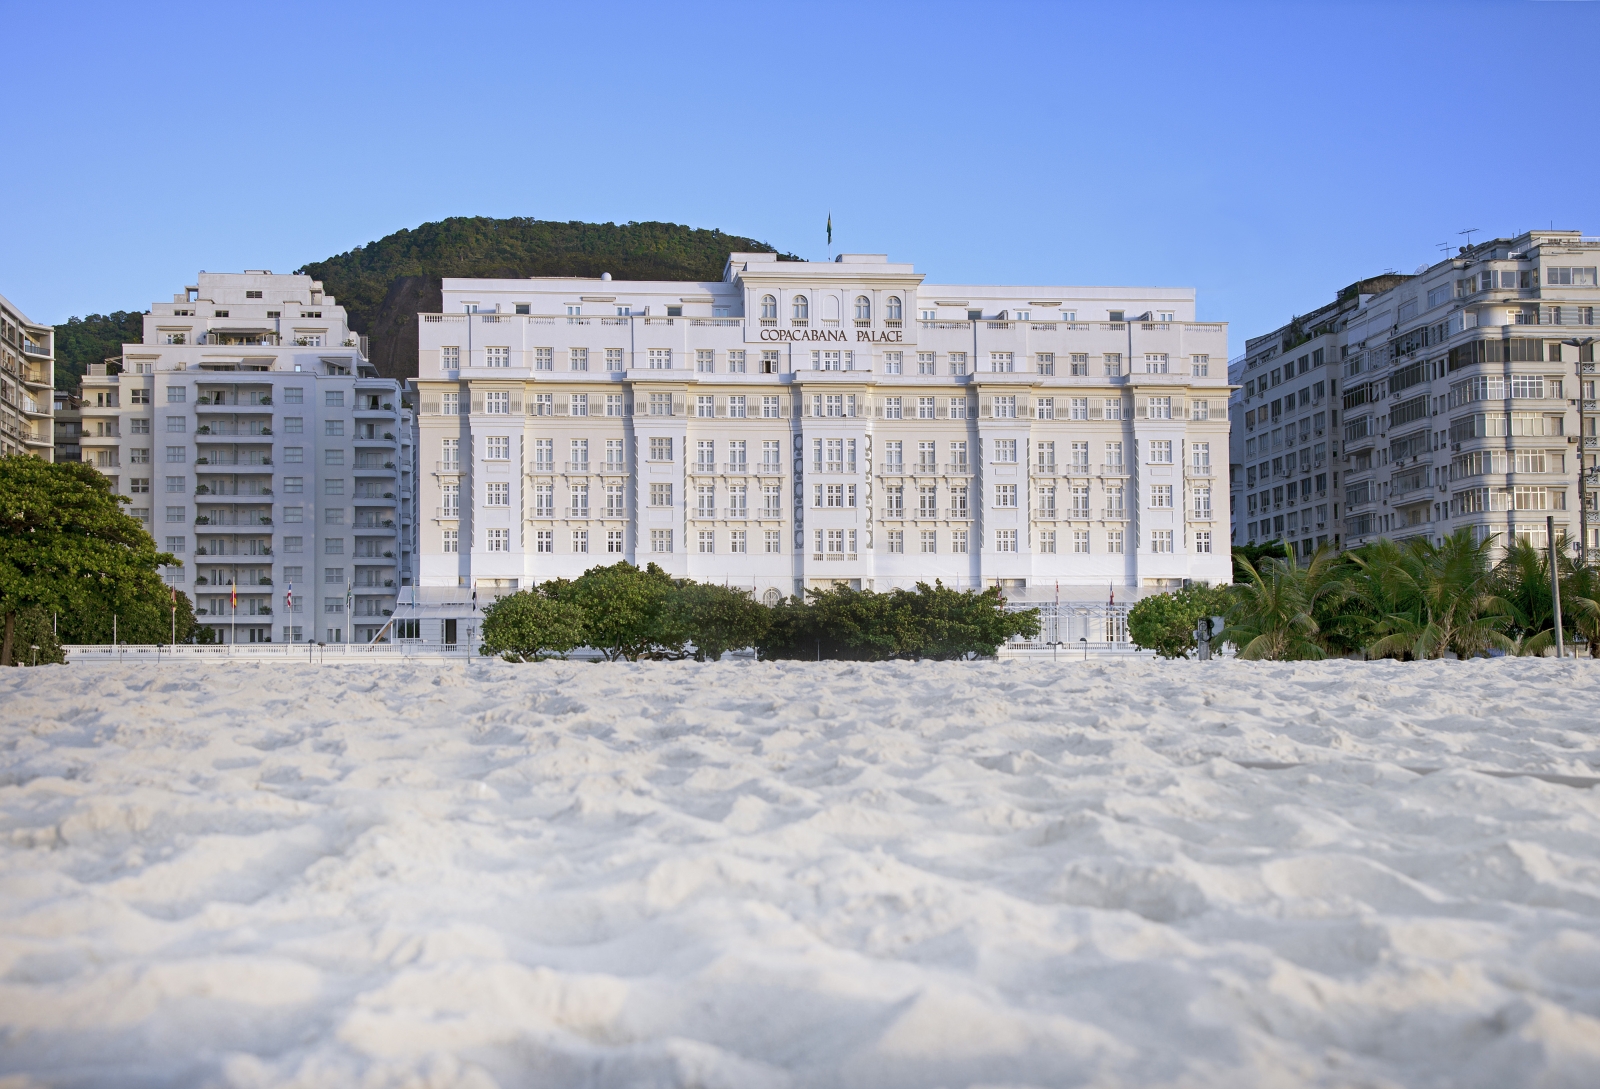 Facade at Belmond Copacabana Palace in Brazil